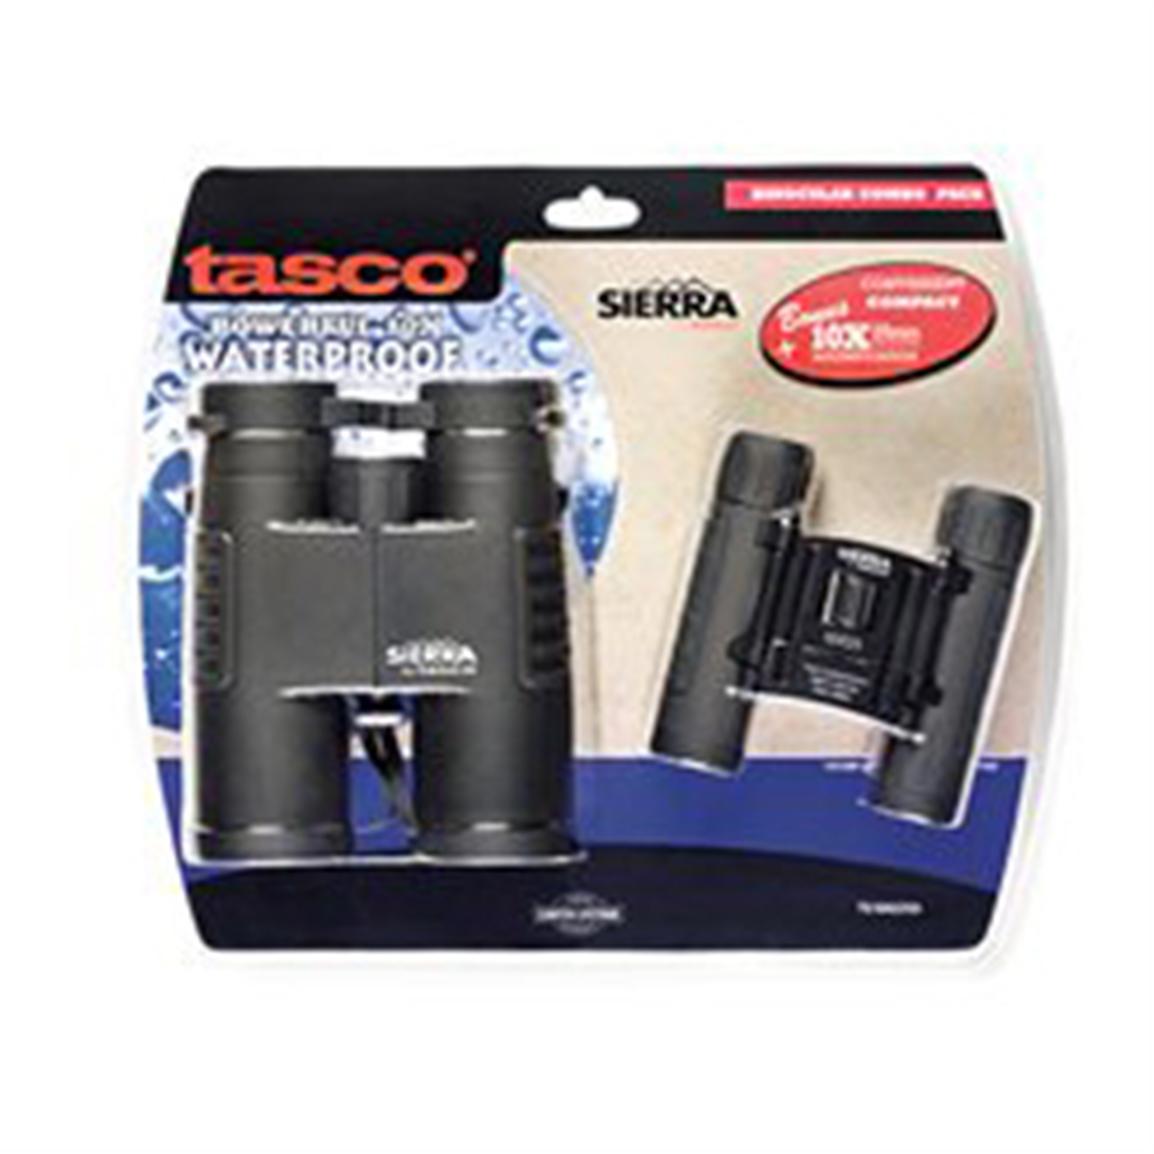 Tasco® Sierra 10x42 mm and 10x25 mm Binocular Combo Pack